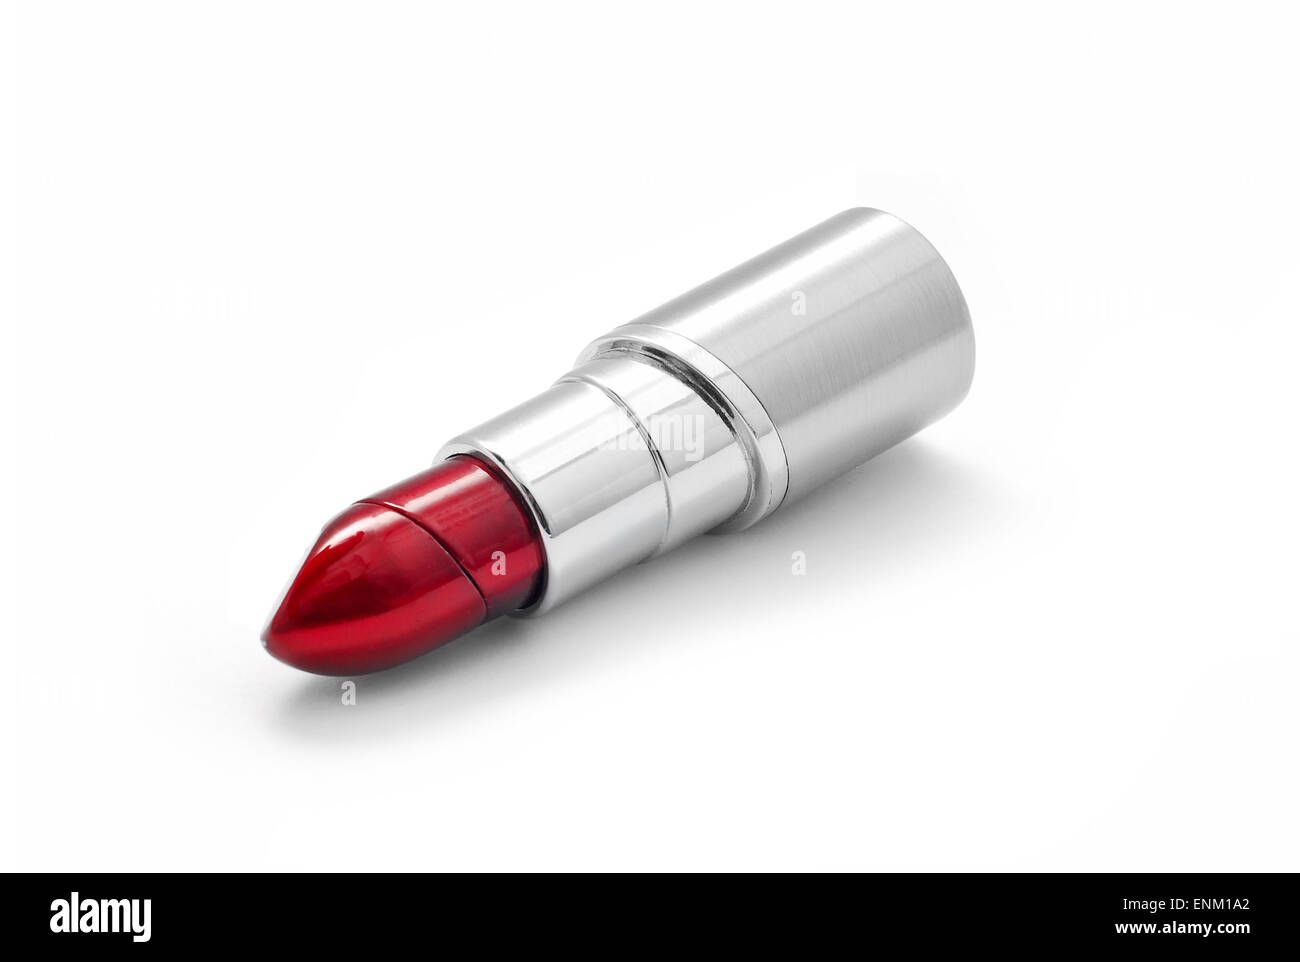 lipstick shaped lighter on white Stock Photo